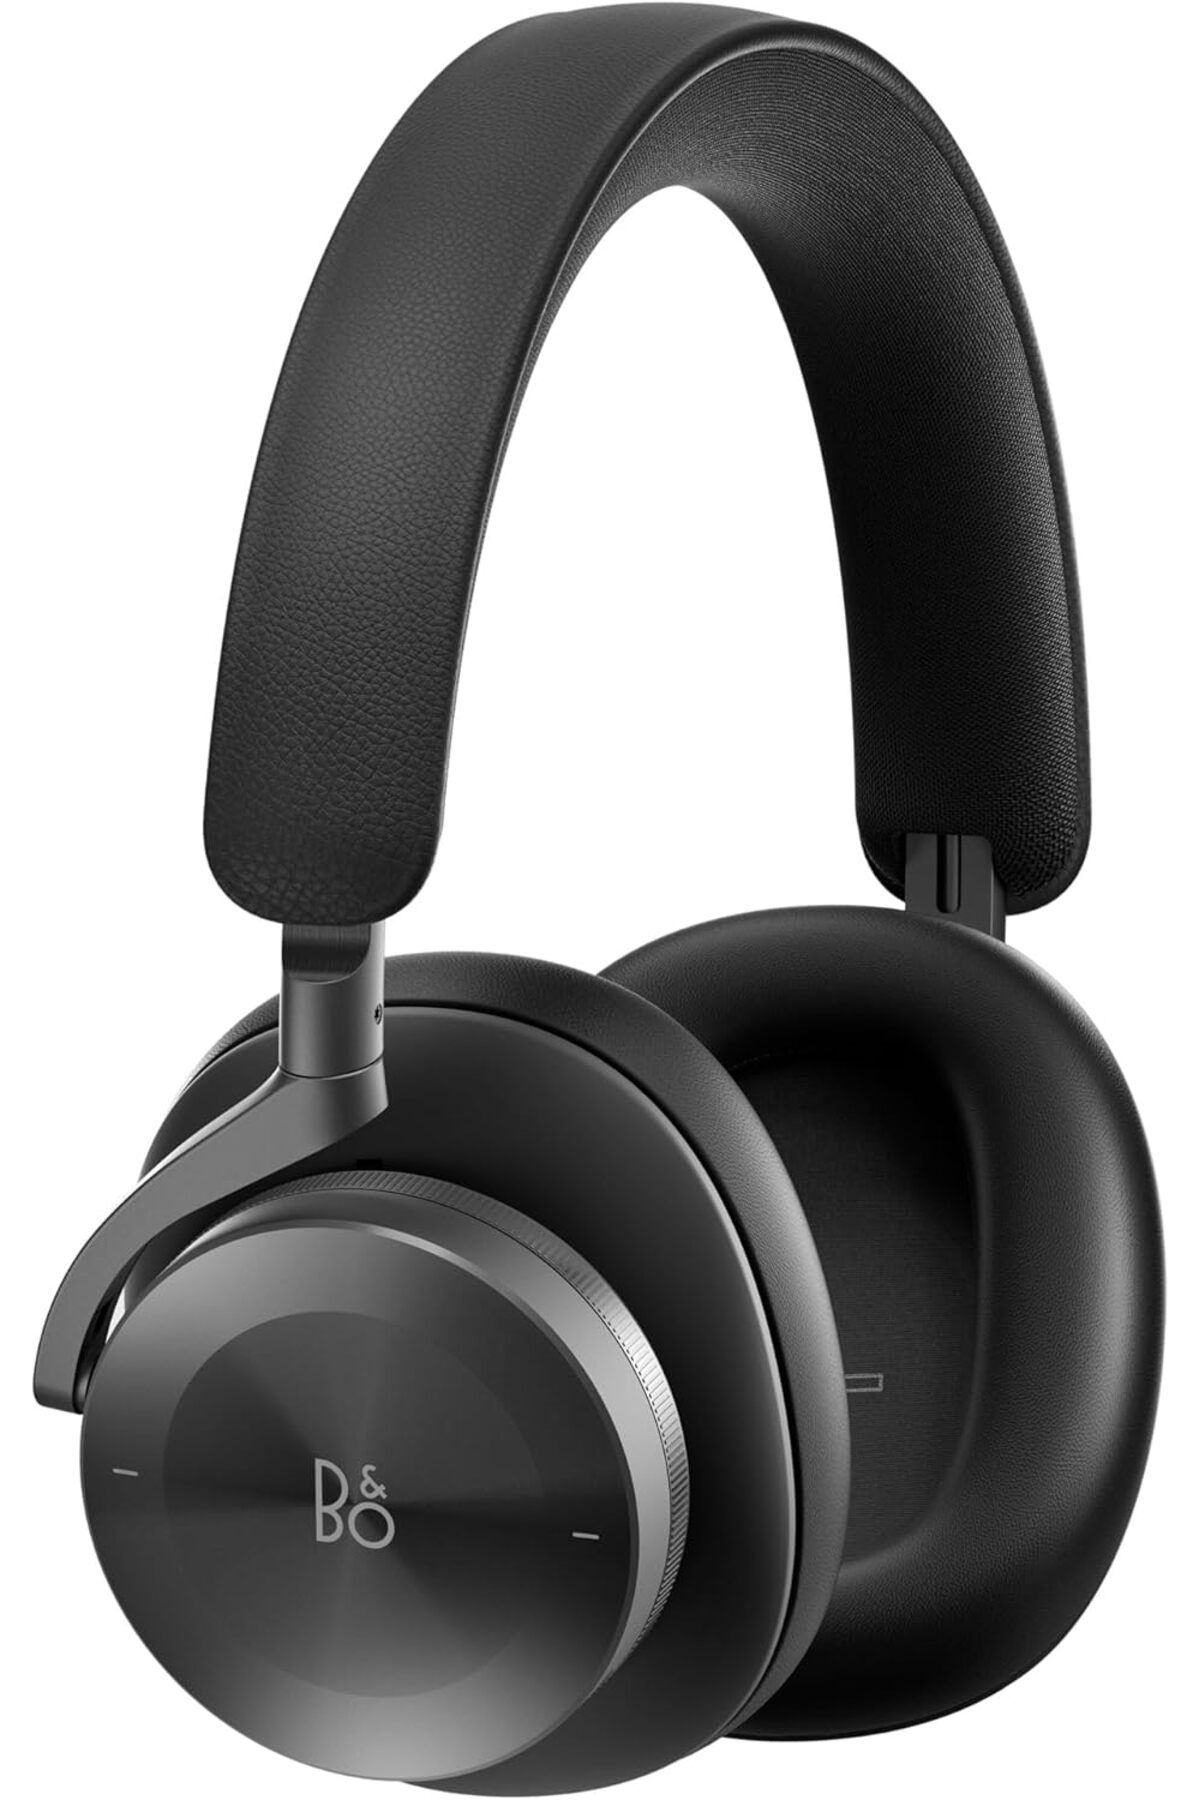 BANG & OLUFSEN Beoplay H95 - Kablosuz Kulak Üstü Kulaklık - Adaptif Gürültü Engelleme, Premium Malze